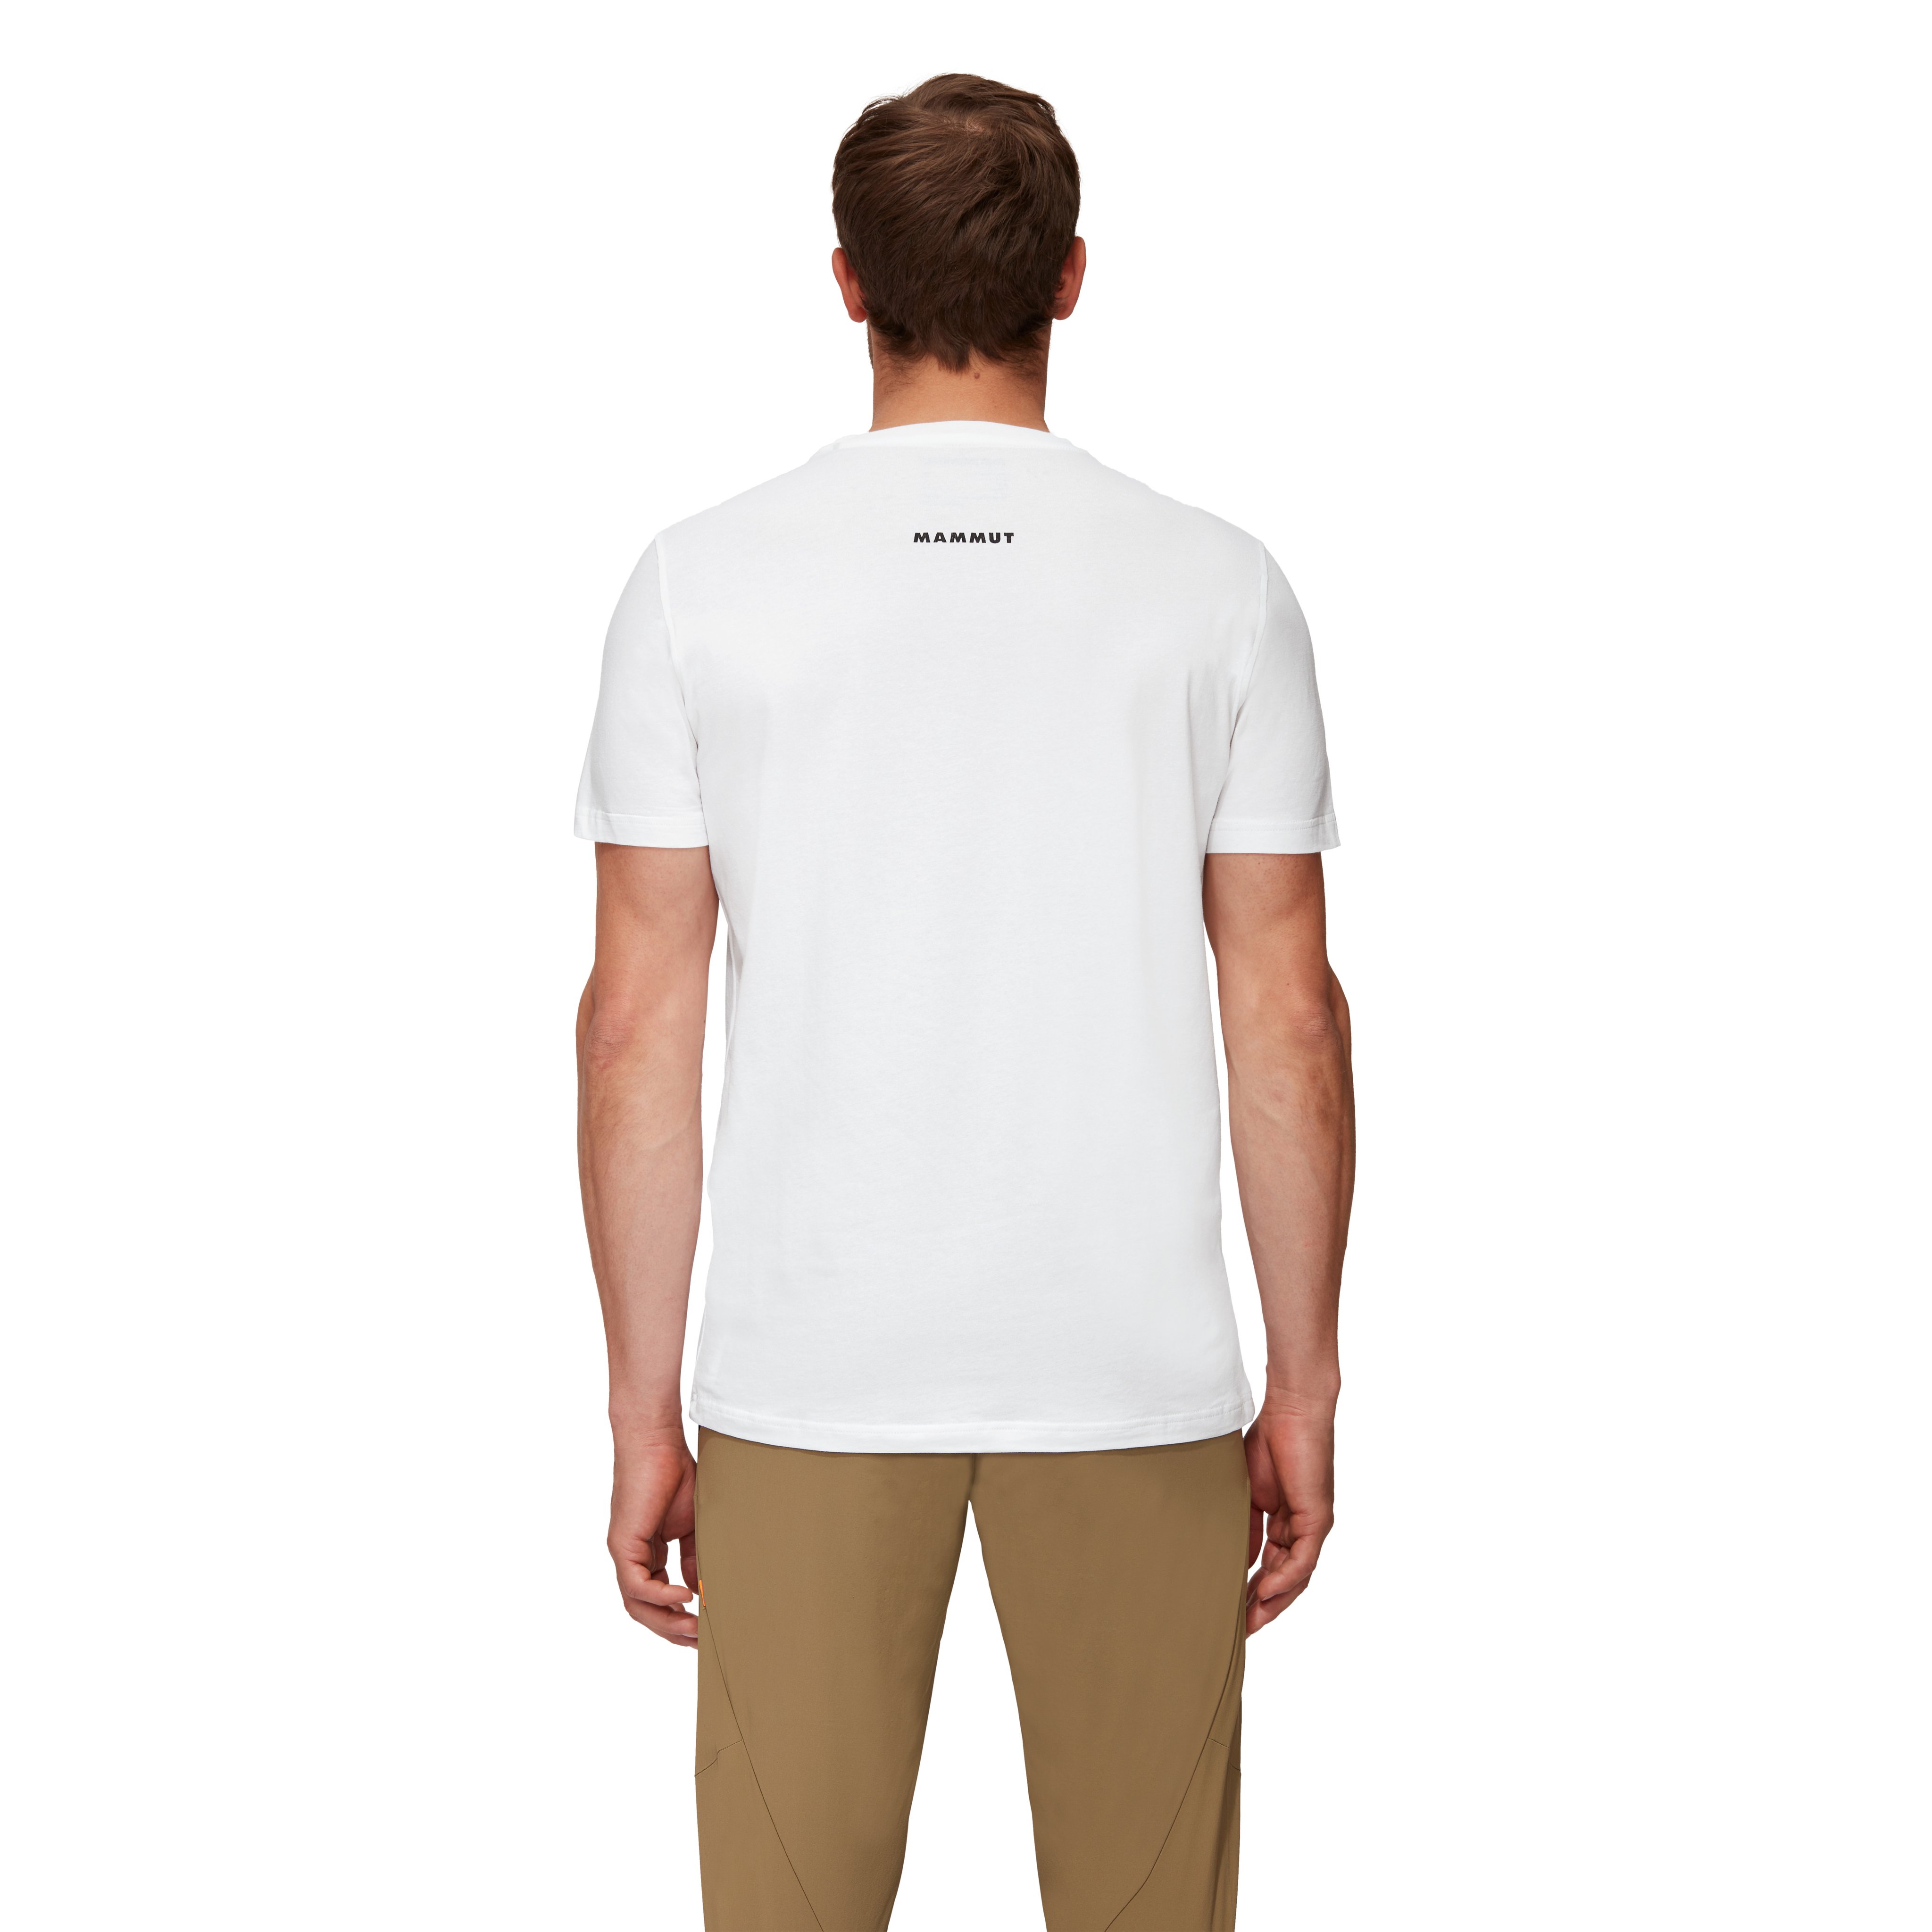 Nations T-Shirt Men product image